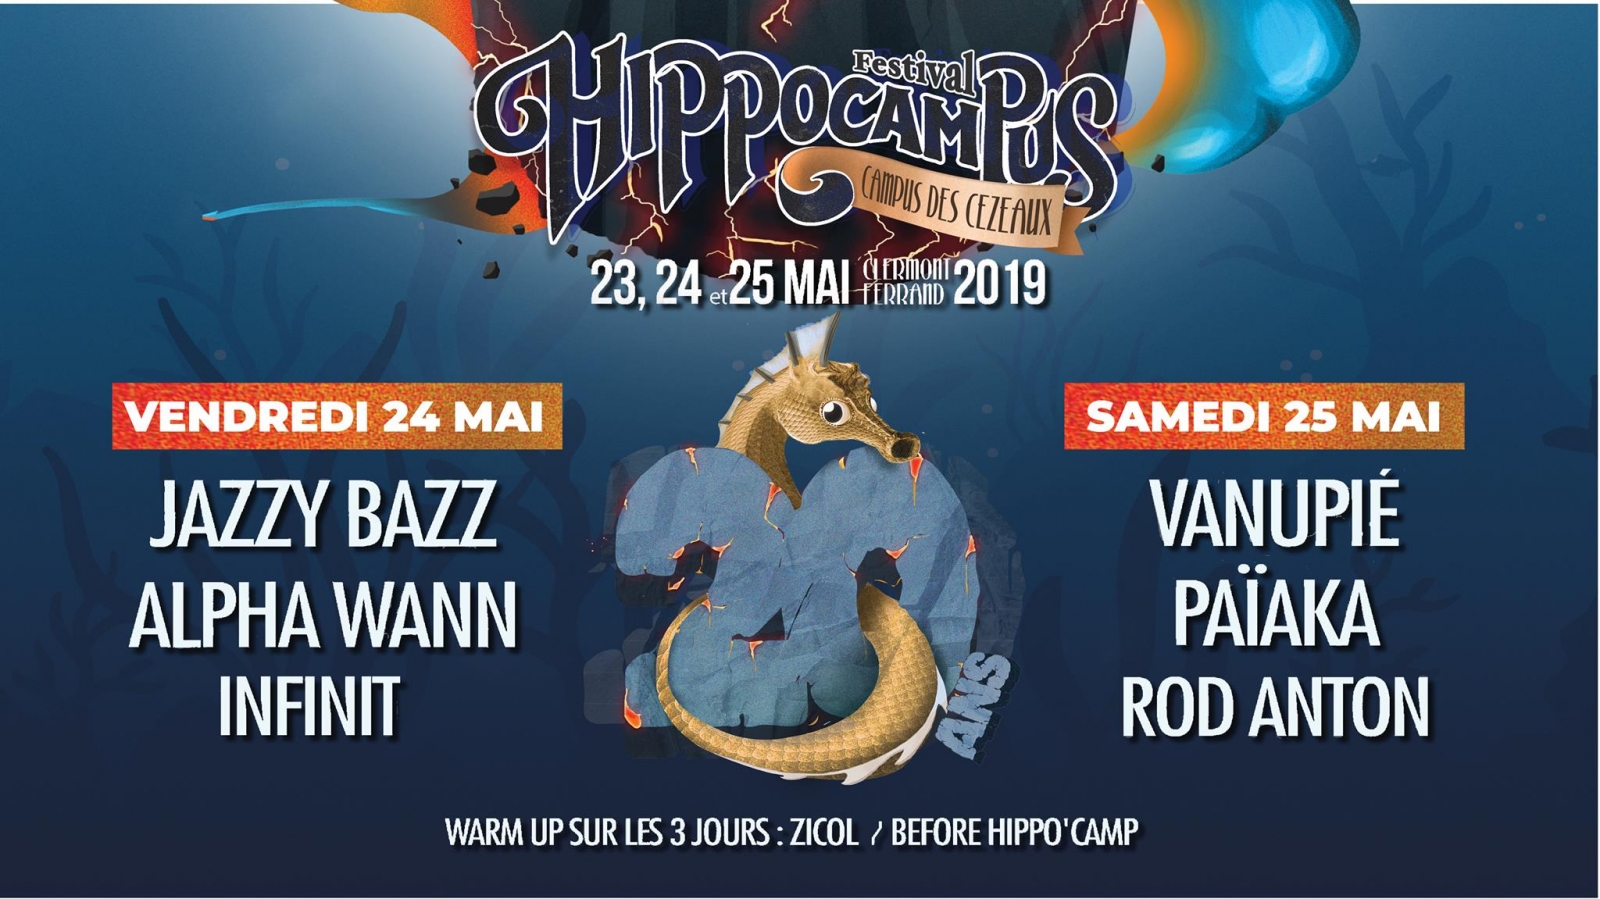 Festival Hippocampus 2019 poster